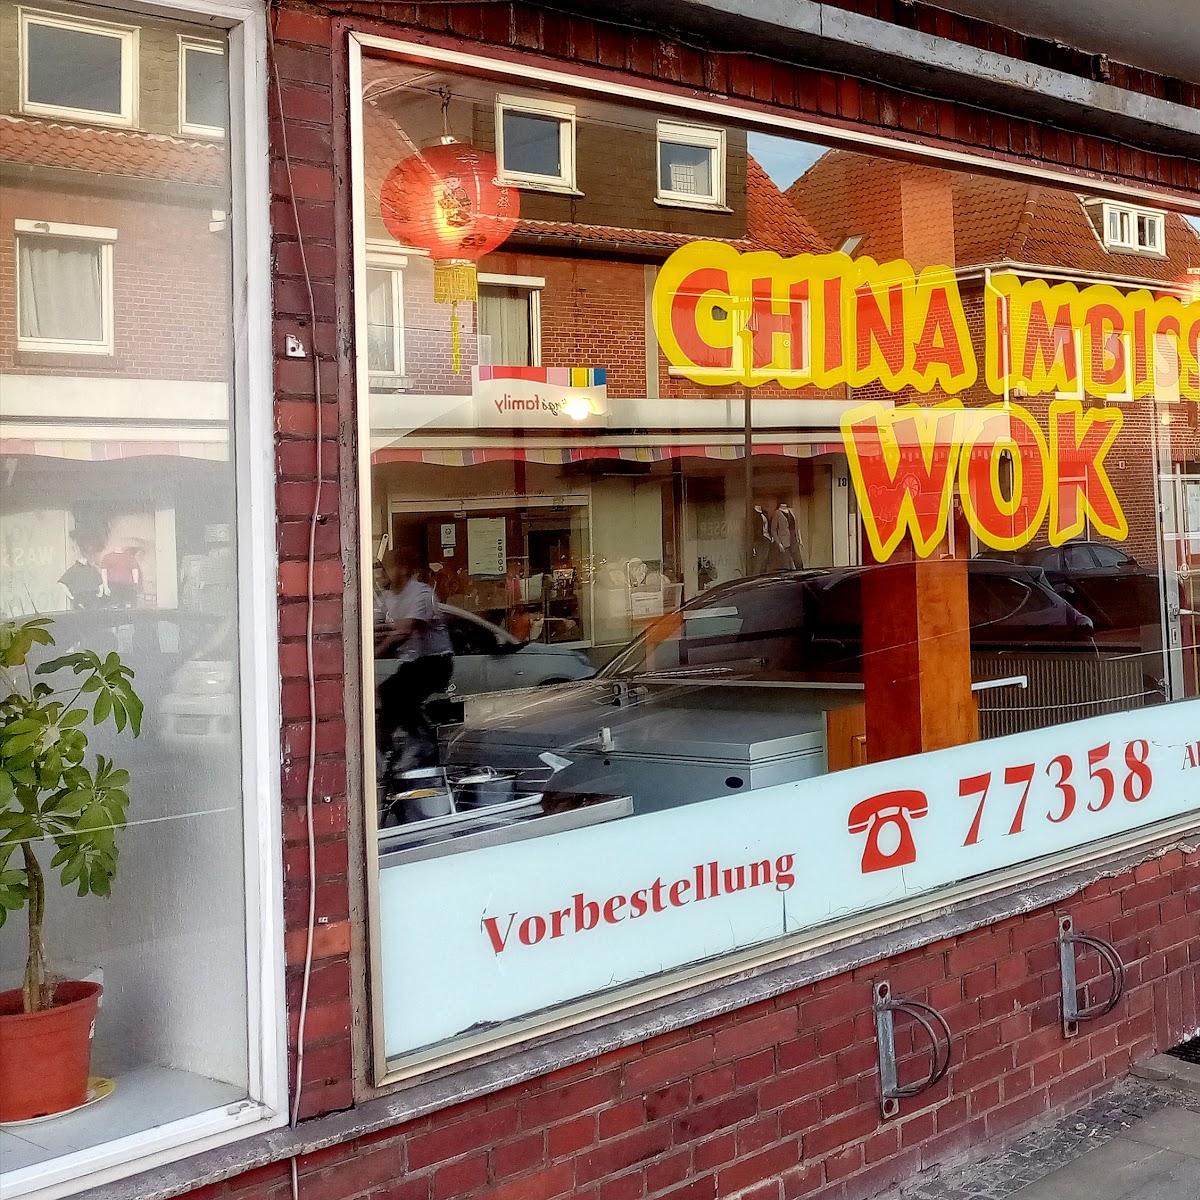 Restaurant "China-Imbiss Wok" in Nordhorn